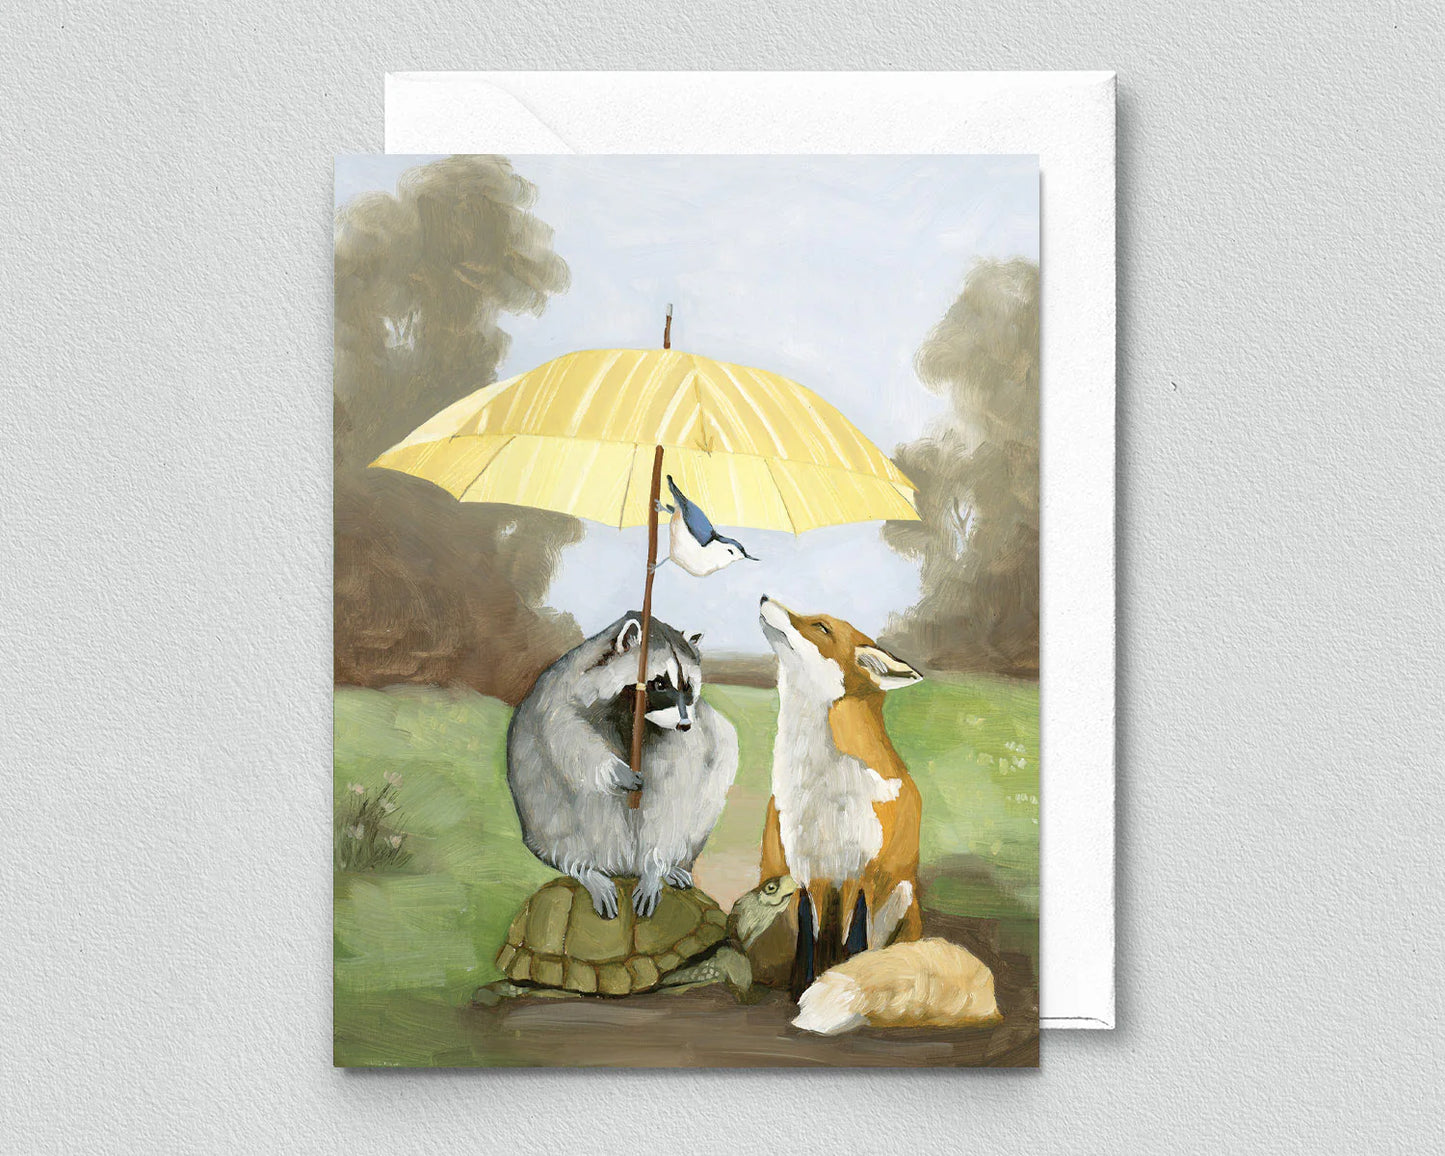 Fox & Raccoon with Umbrella Greeting Card (blank inside) by Kim Ferreira (Joie de Vivre)